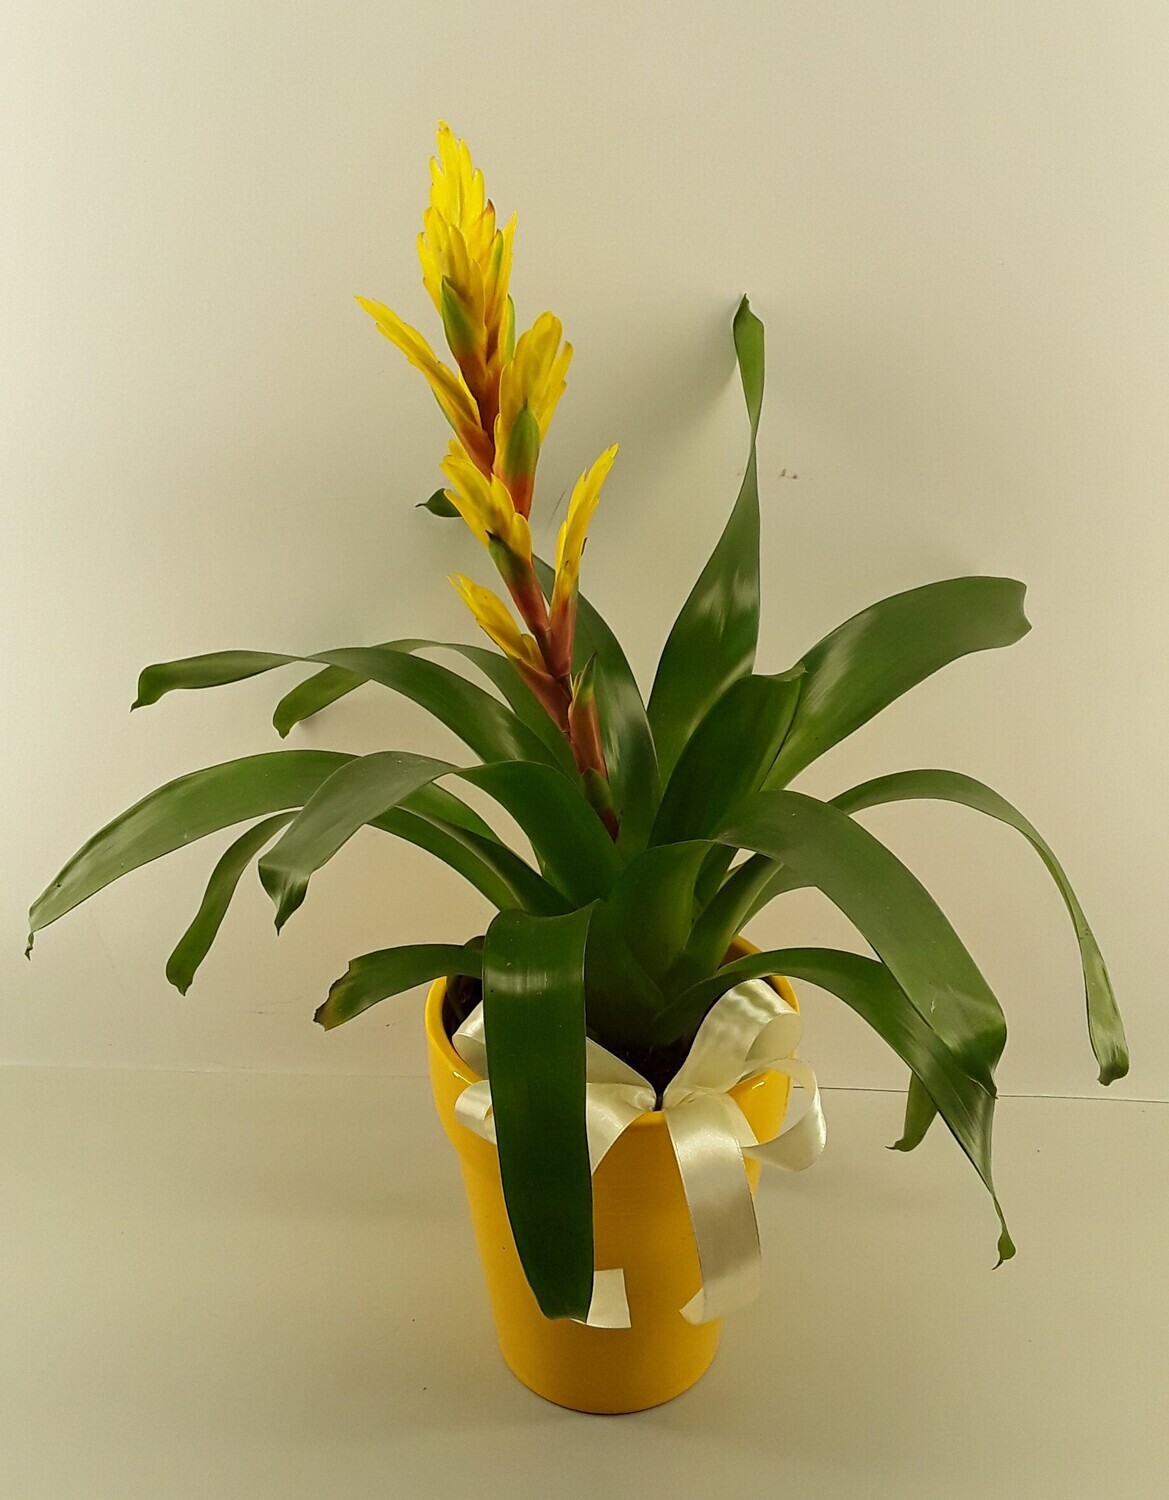 Plant2--Yellow vriesea plant!!!